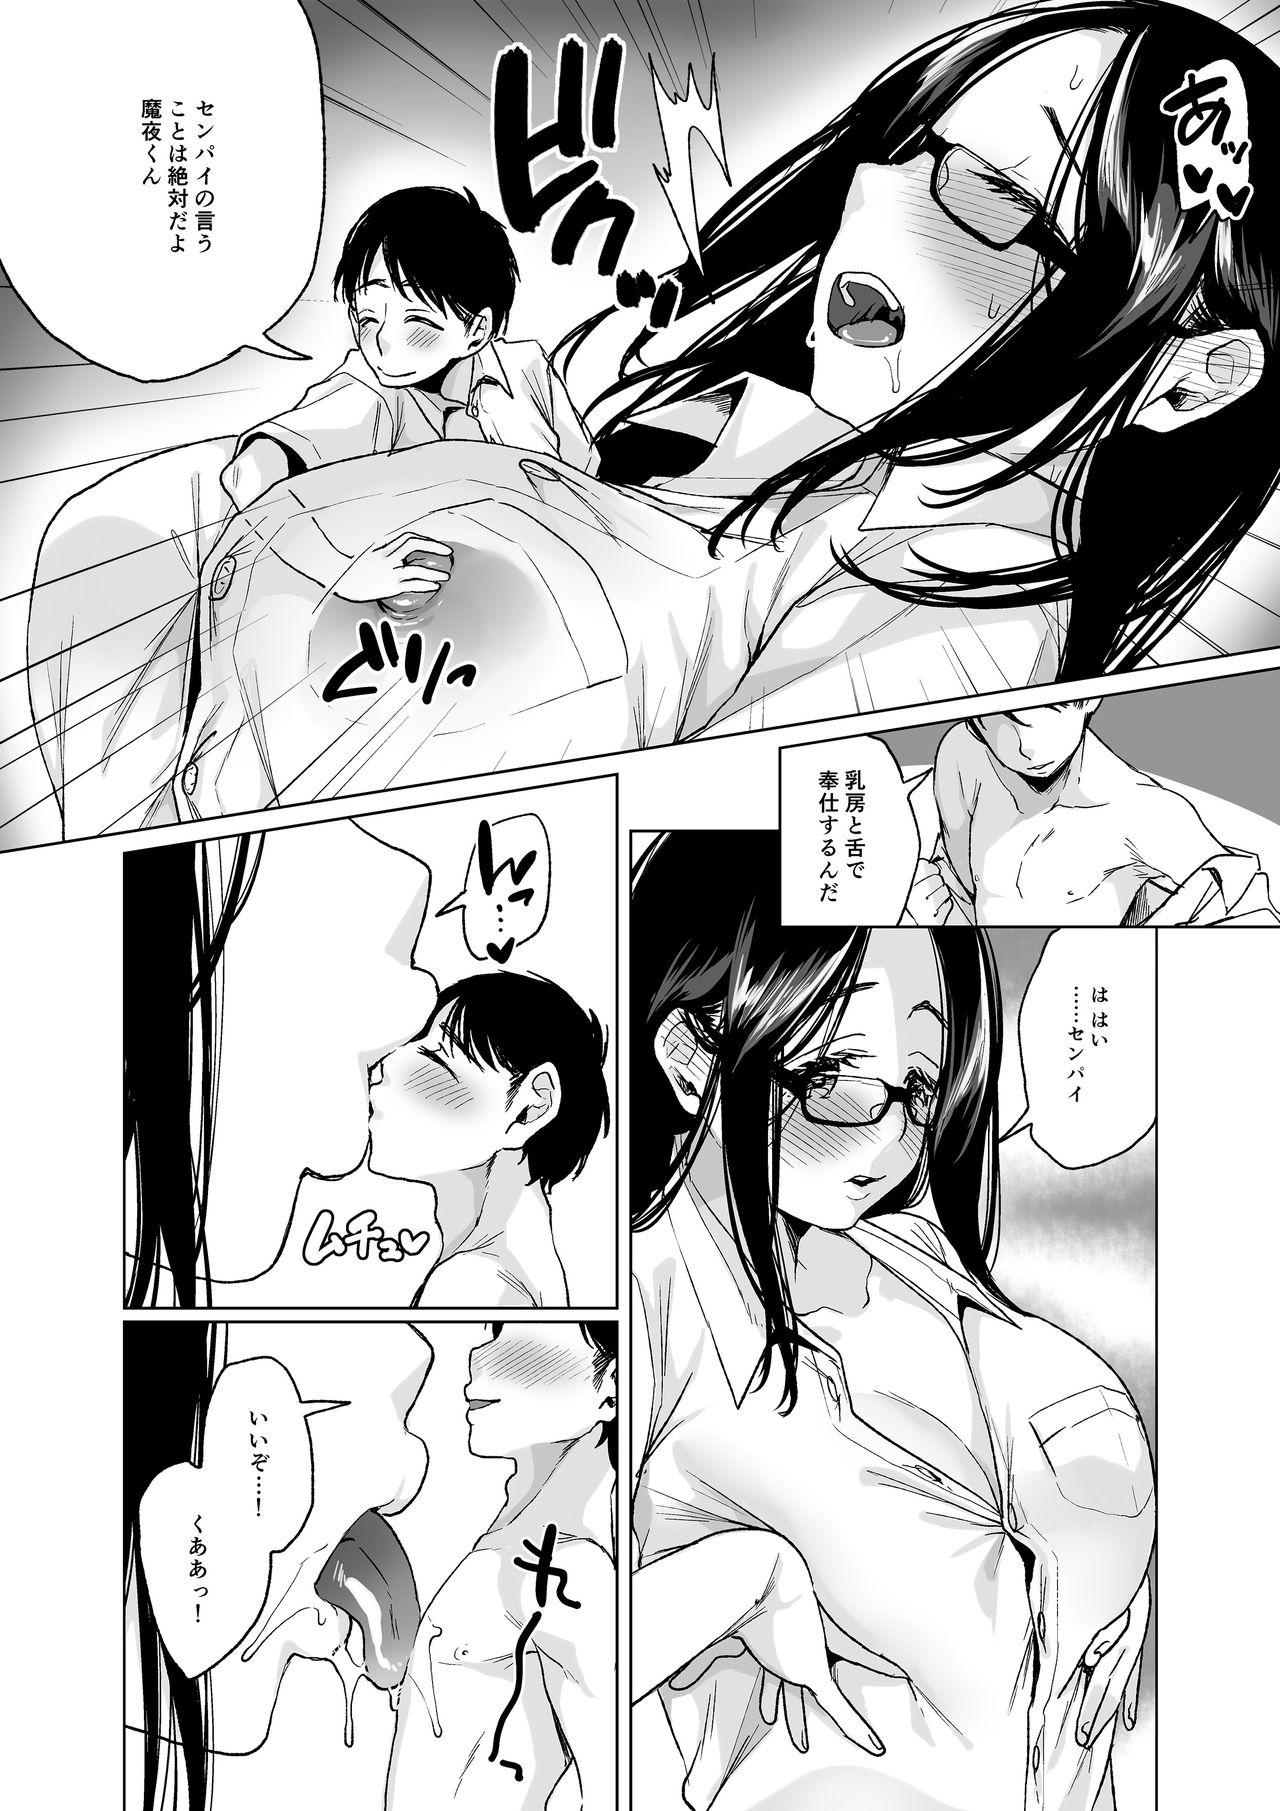 Australian MM Vol. 50 Shumatsu wa Oppai ni Yosete♥ Muscular - Page 7